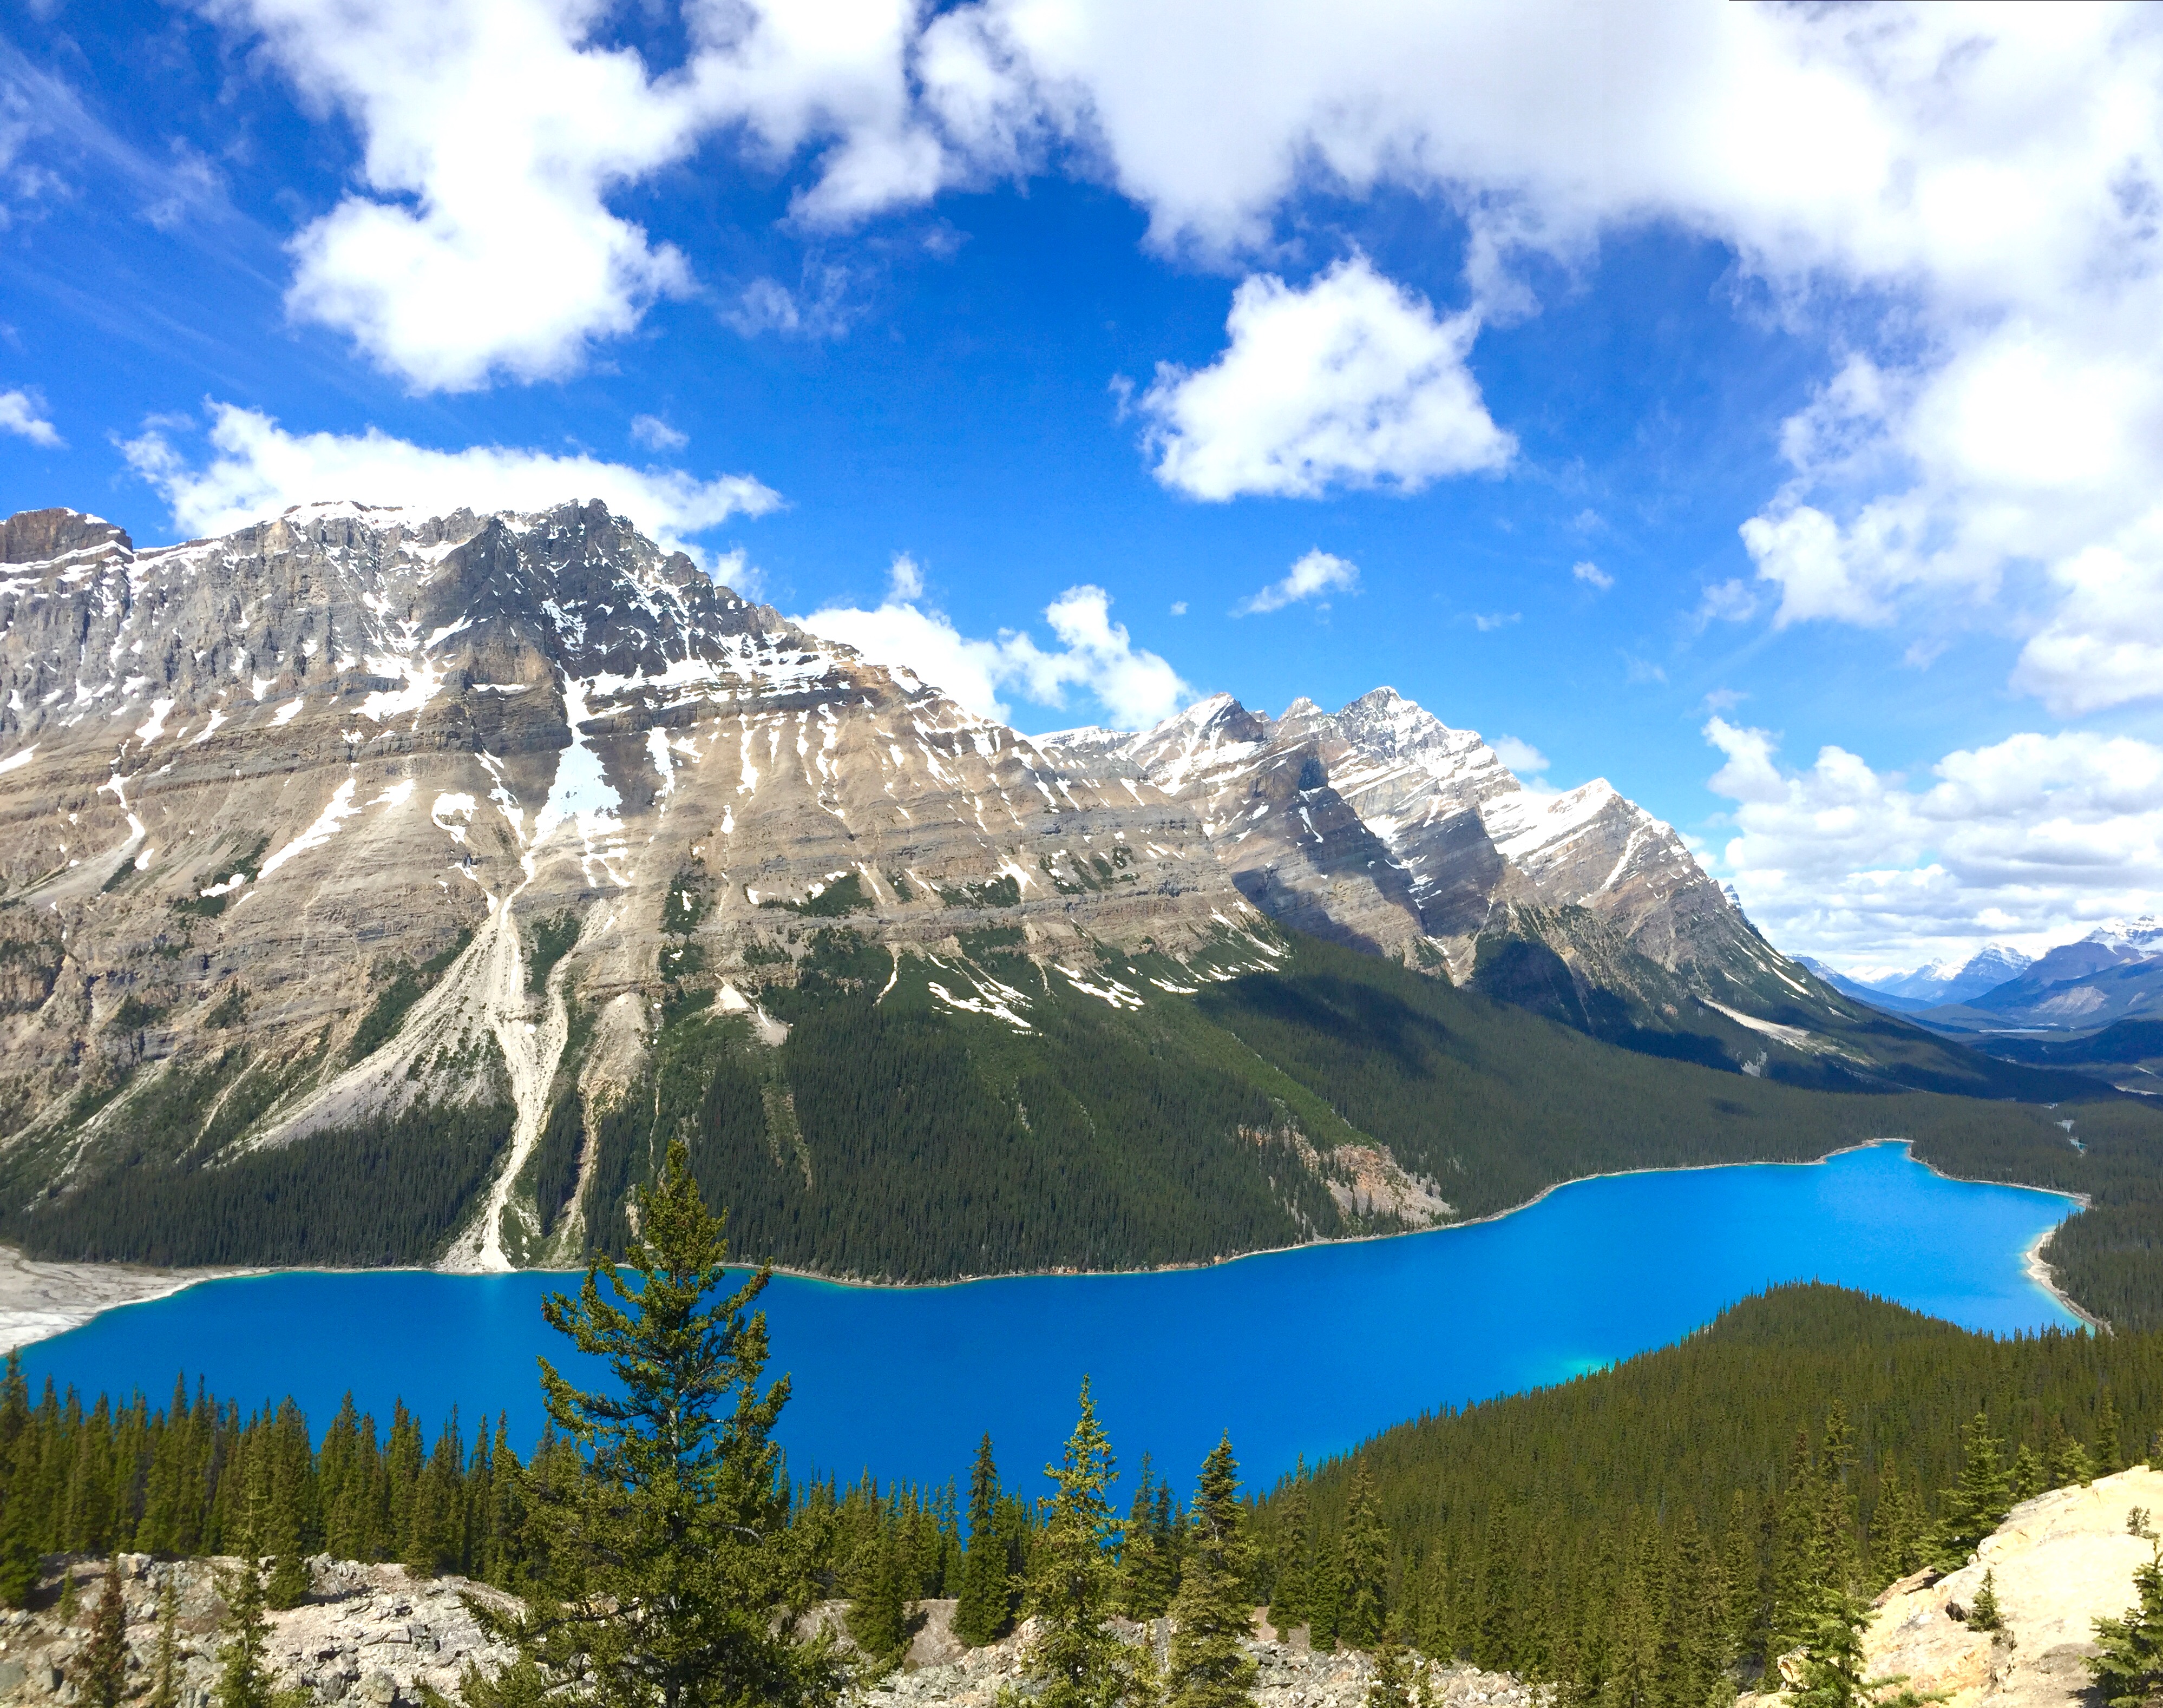 Canadian Rockies, Banff+Jasper National Parks from Calgary, visit Johnston Canyon, Columbia Icefield, Peyto Lake 4-days tour